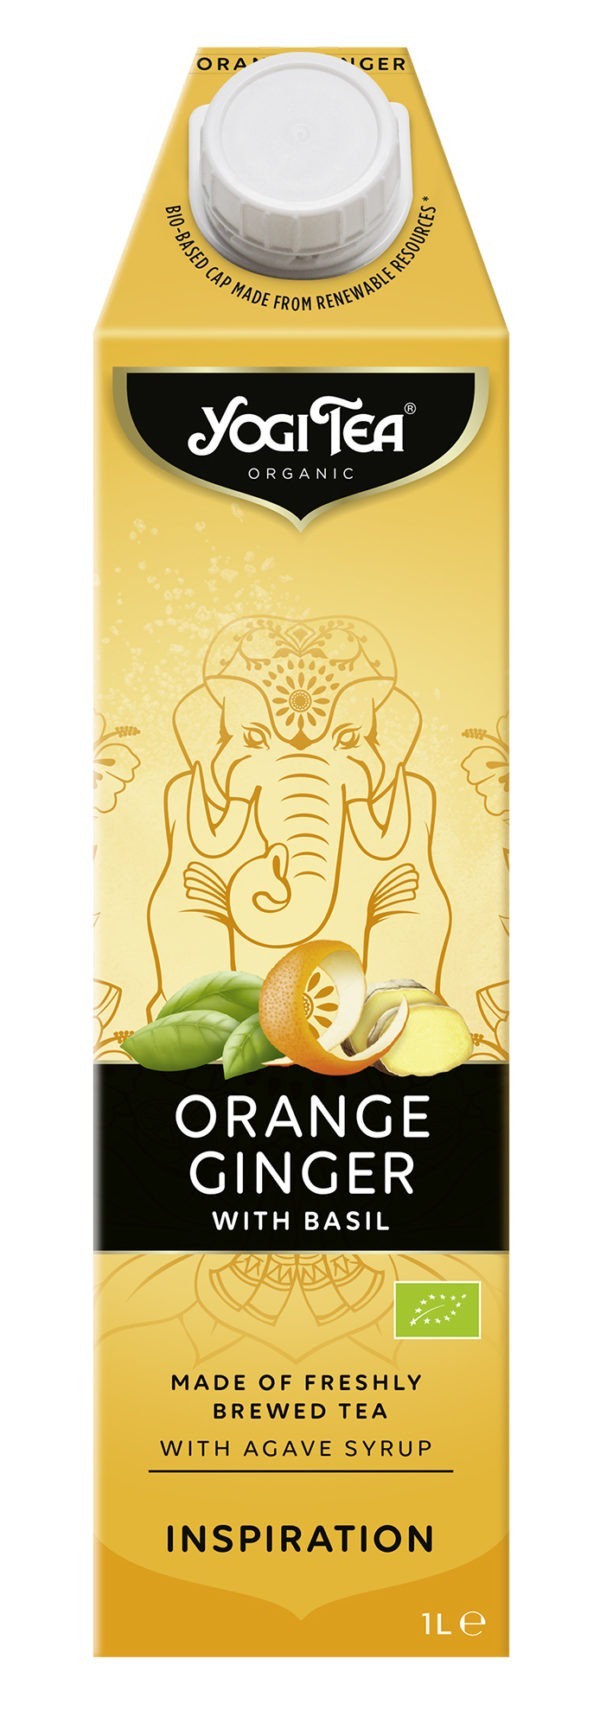 Yogi Tea DE 00 Yogi Tea® Ginger Orange Teekaltgettänk 1l Tetra Pak Bio 6 x 1000ml